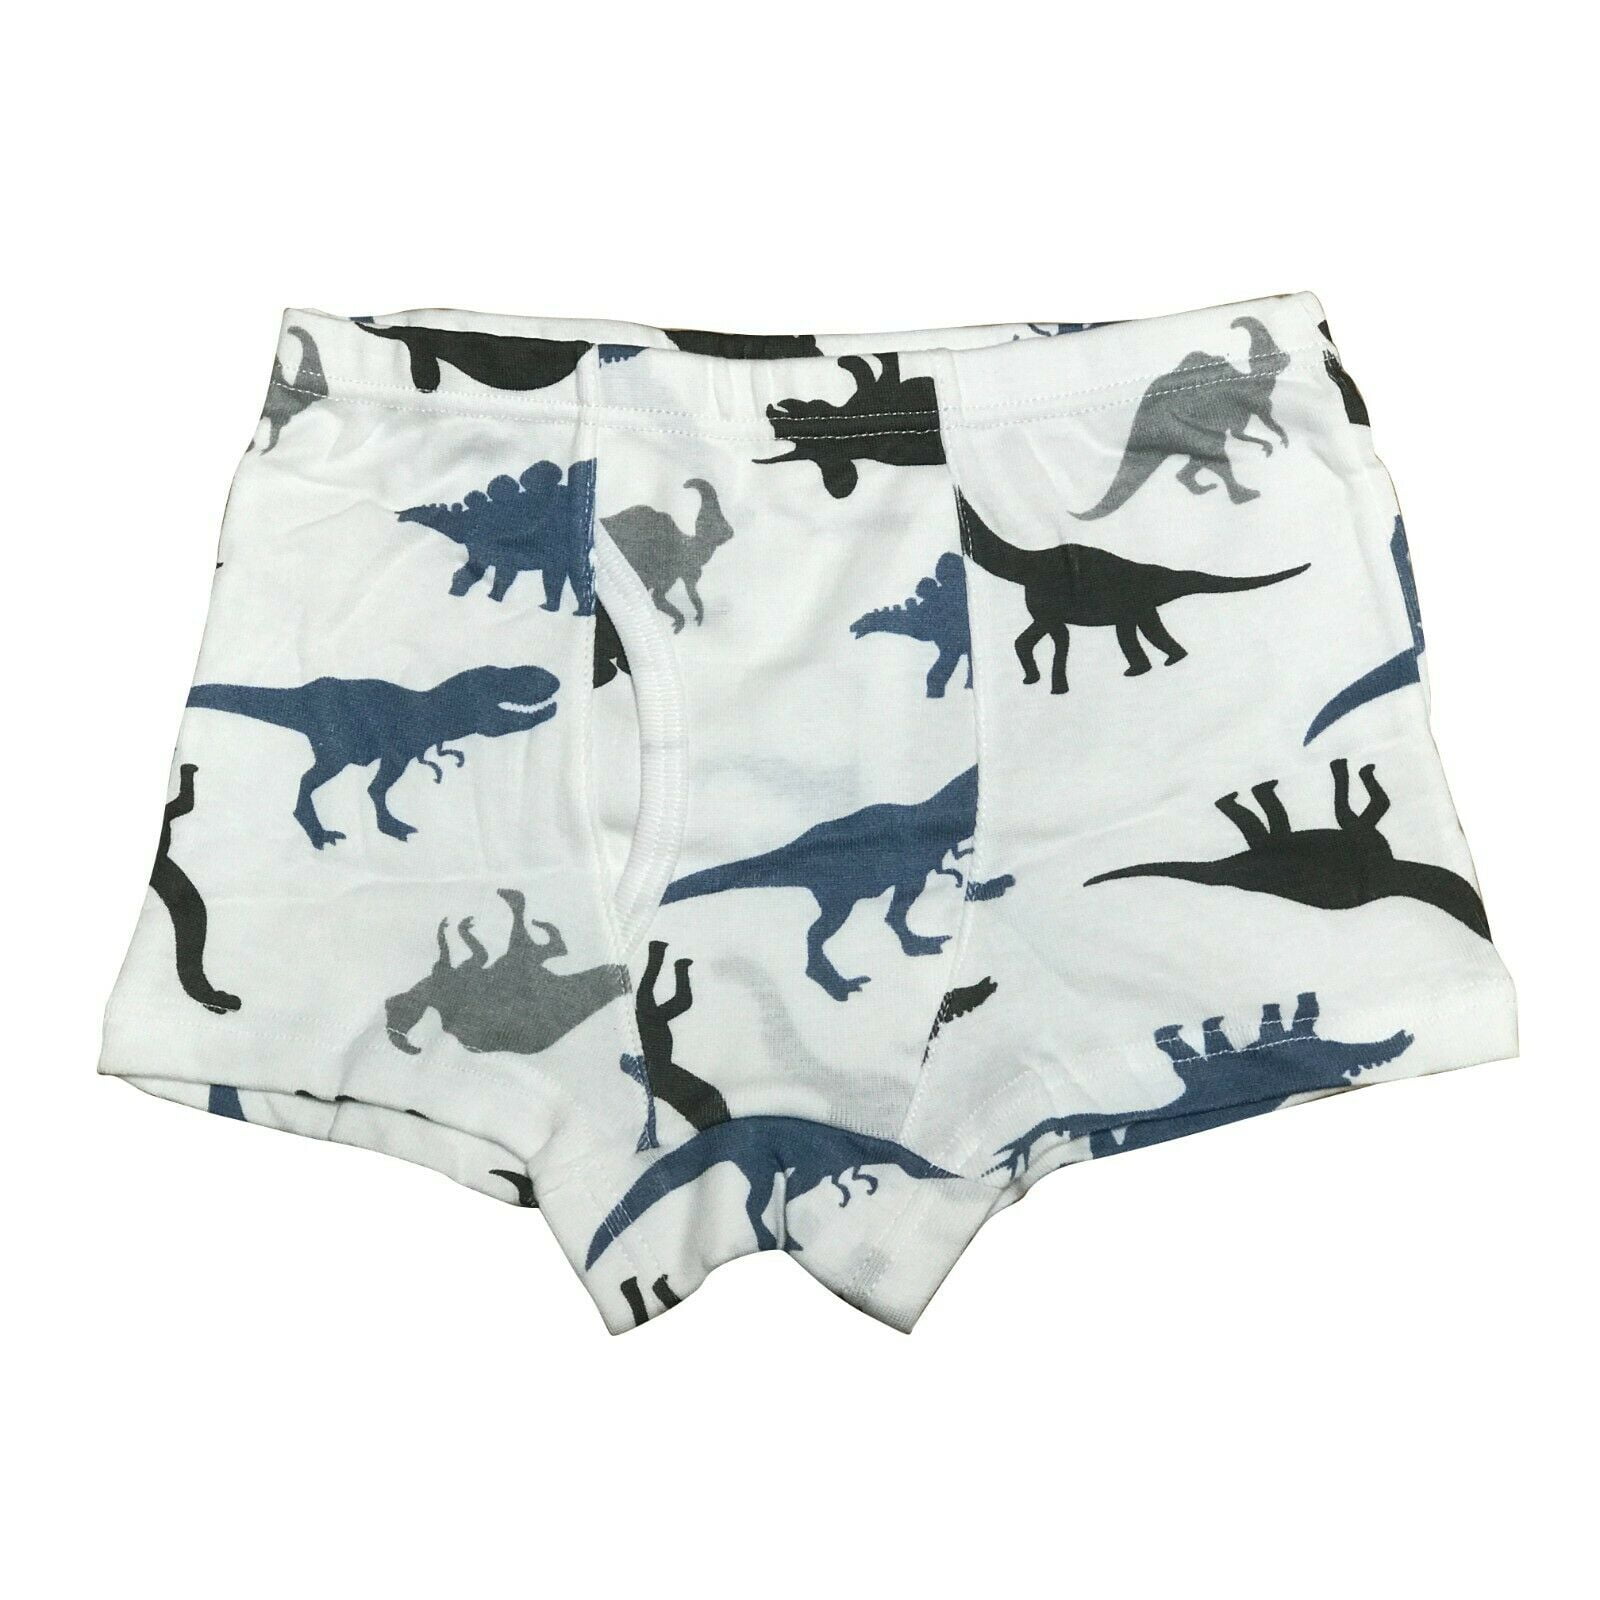 Kleding Jongenskleding Ondergoed 6 PK Cotton Toddler Little Boys Kids Underwear Boxer Briefs Underpants Size 4T 5T 6T 7T 8T 